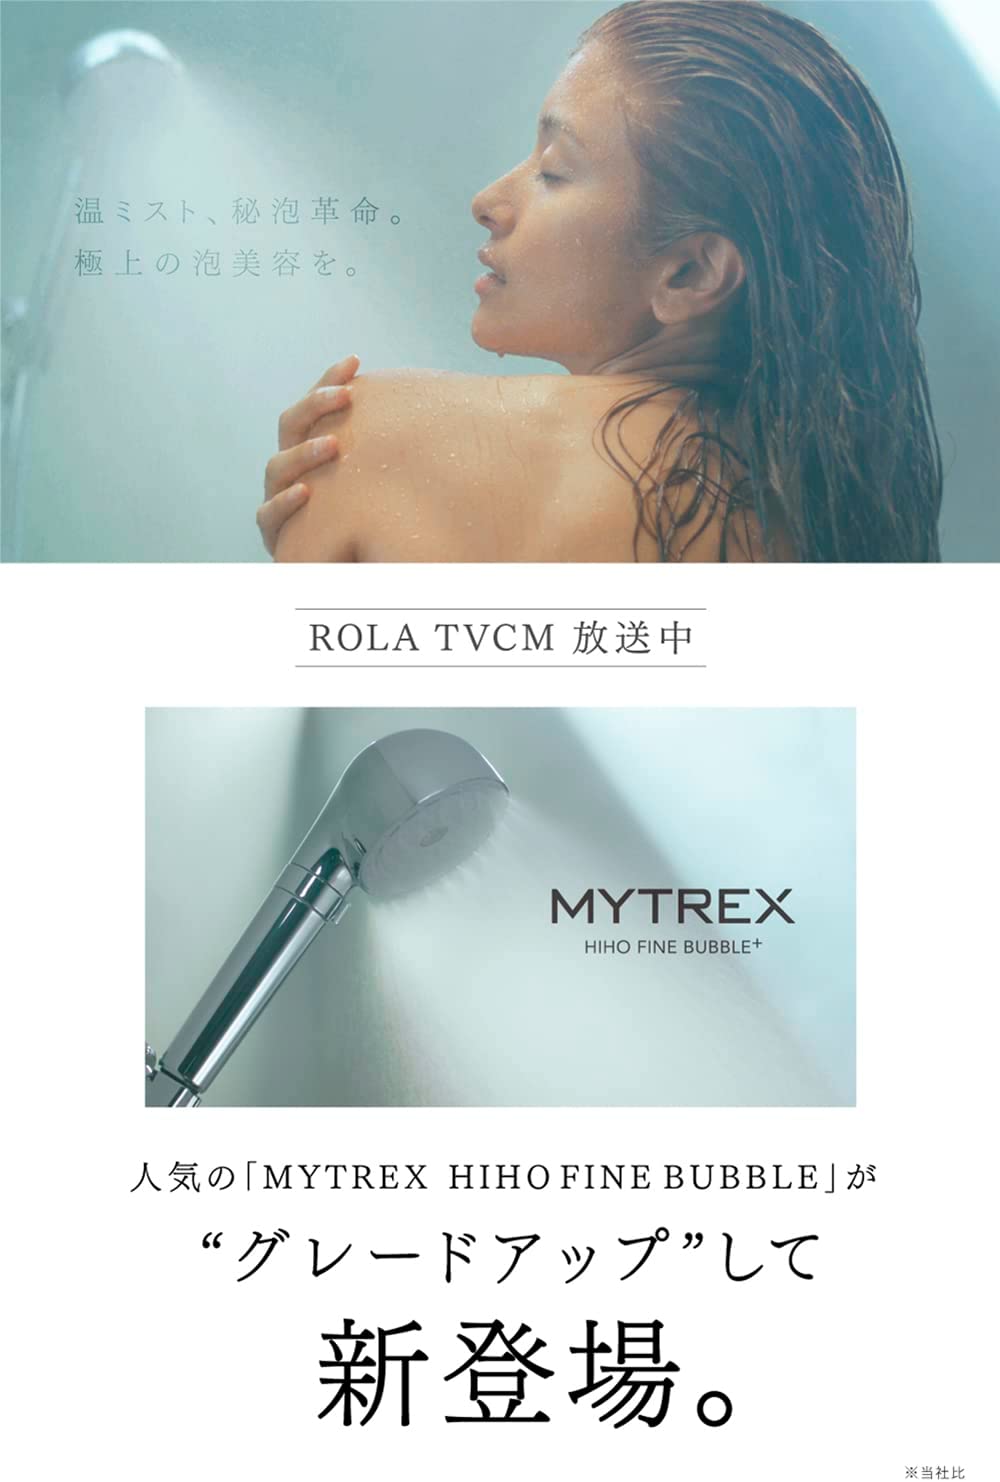 MYTREX HIHO FINE BUBBLE +(マイトレックス ヒホウ ファインバブル 